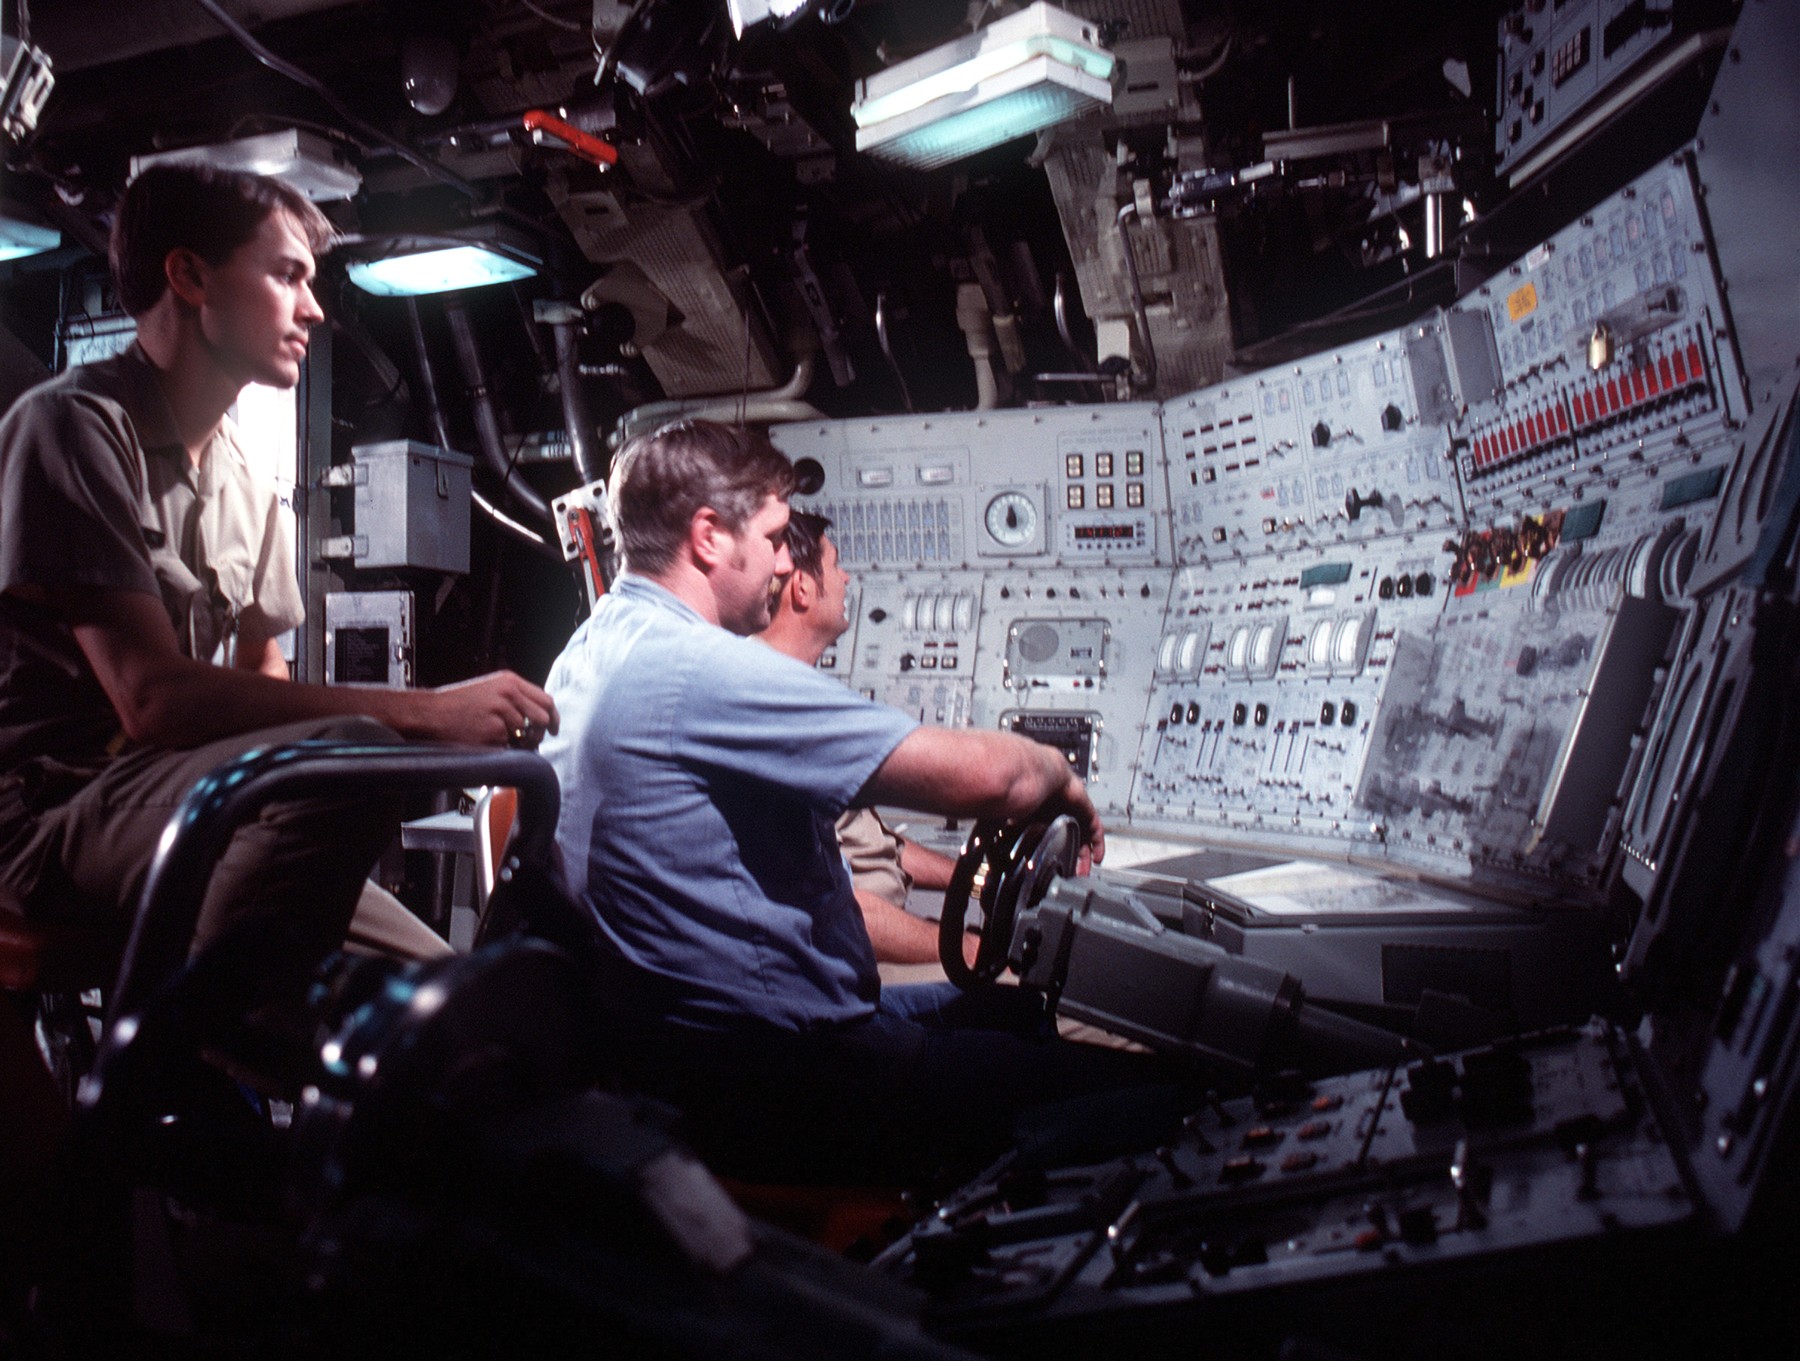 ssbn-726 uss ohio ballistic missile submarine us navy 1981 90 control console room